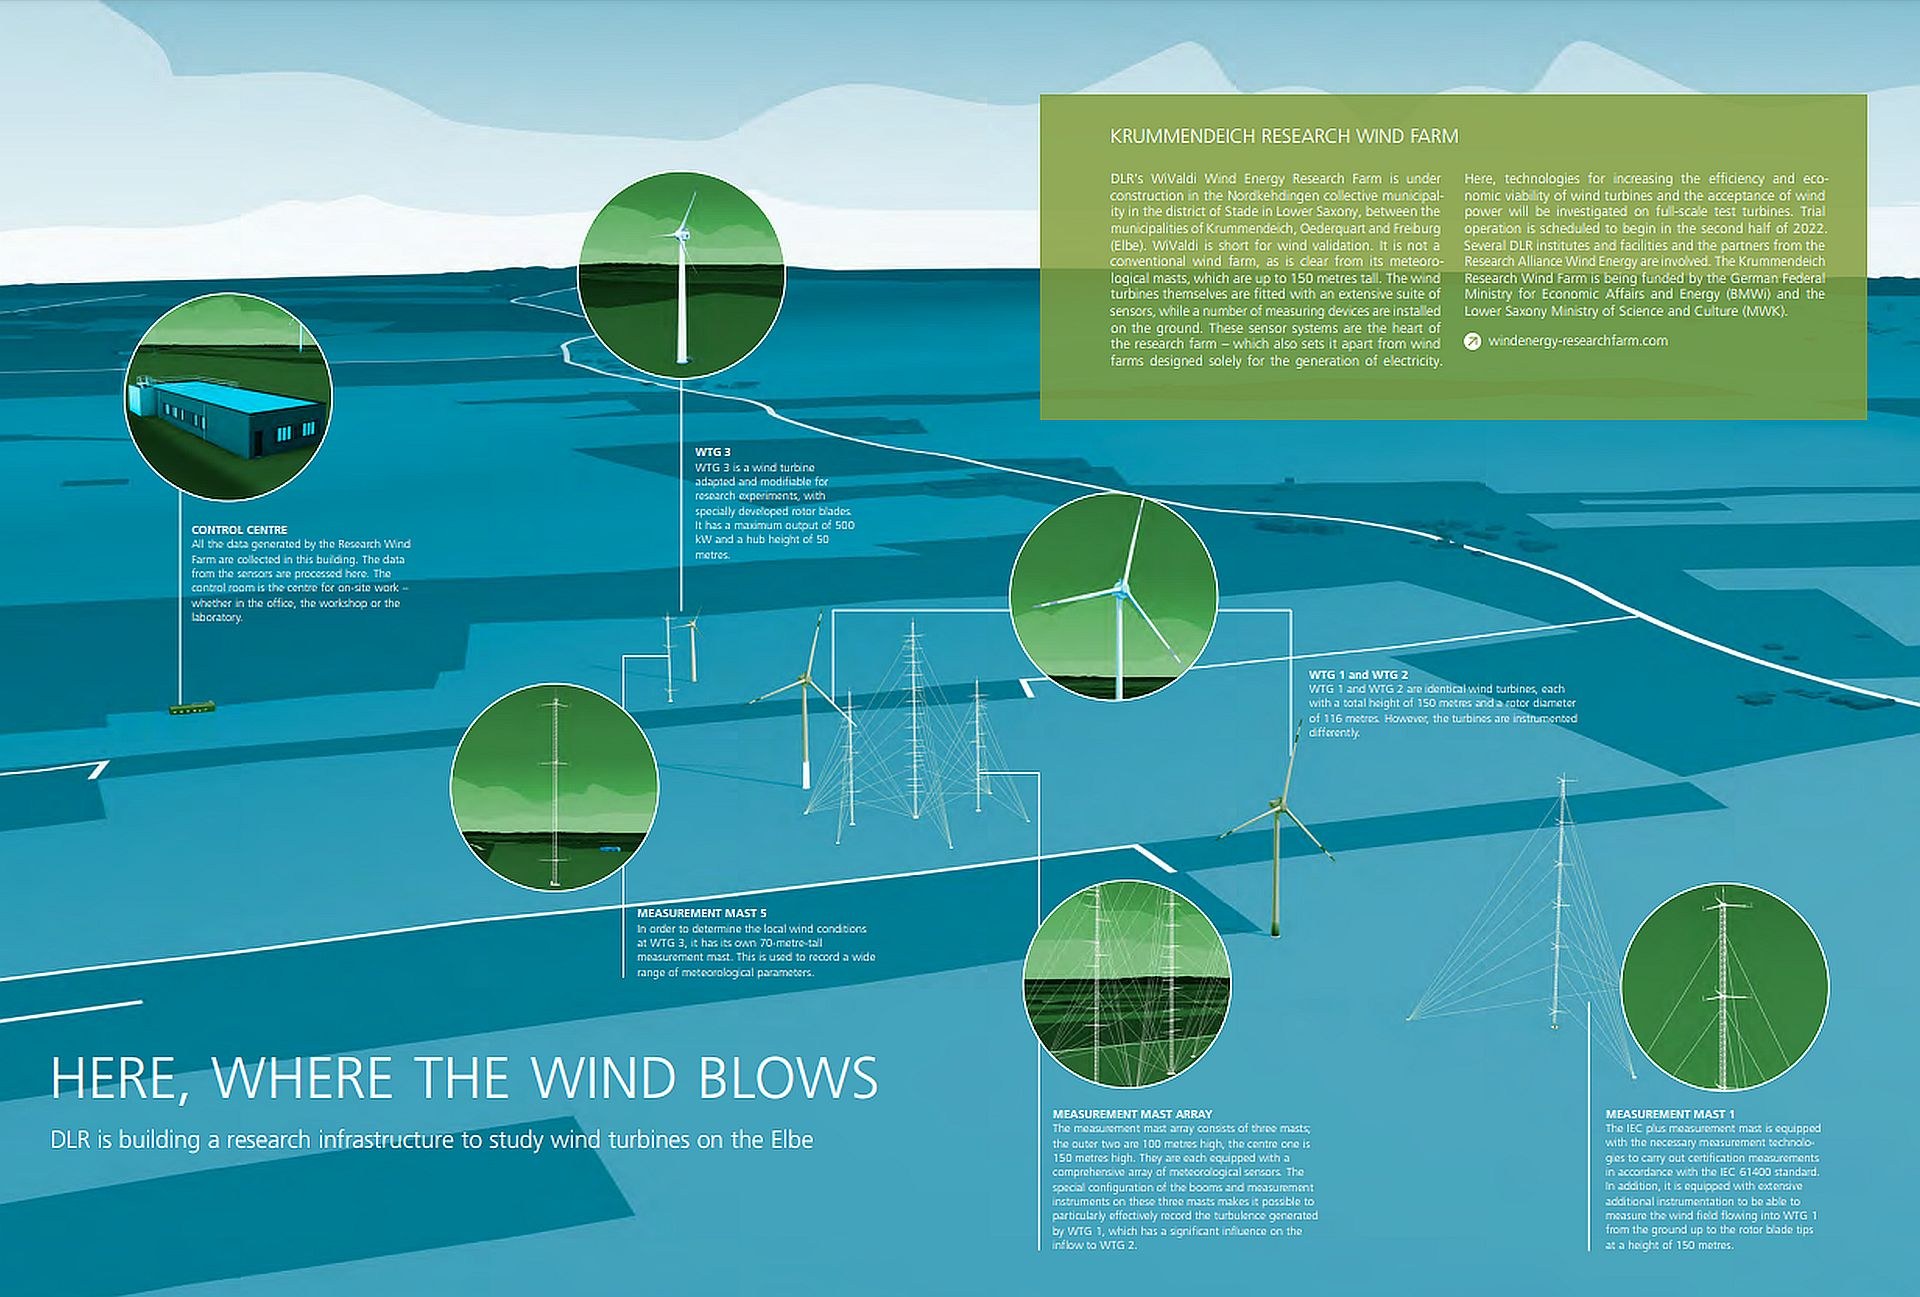 DLR – Krummendeich Research Wind Farm